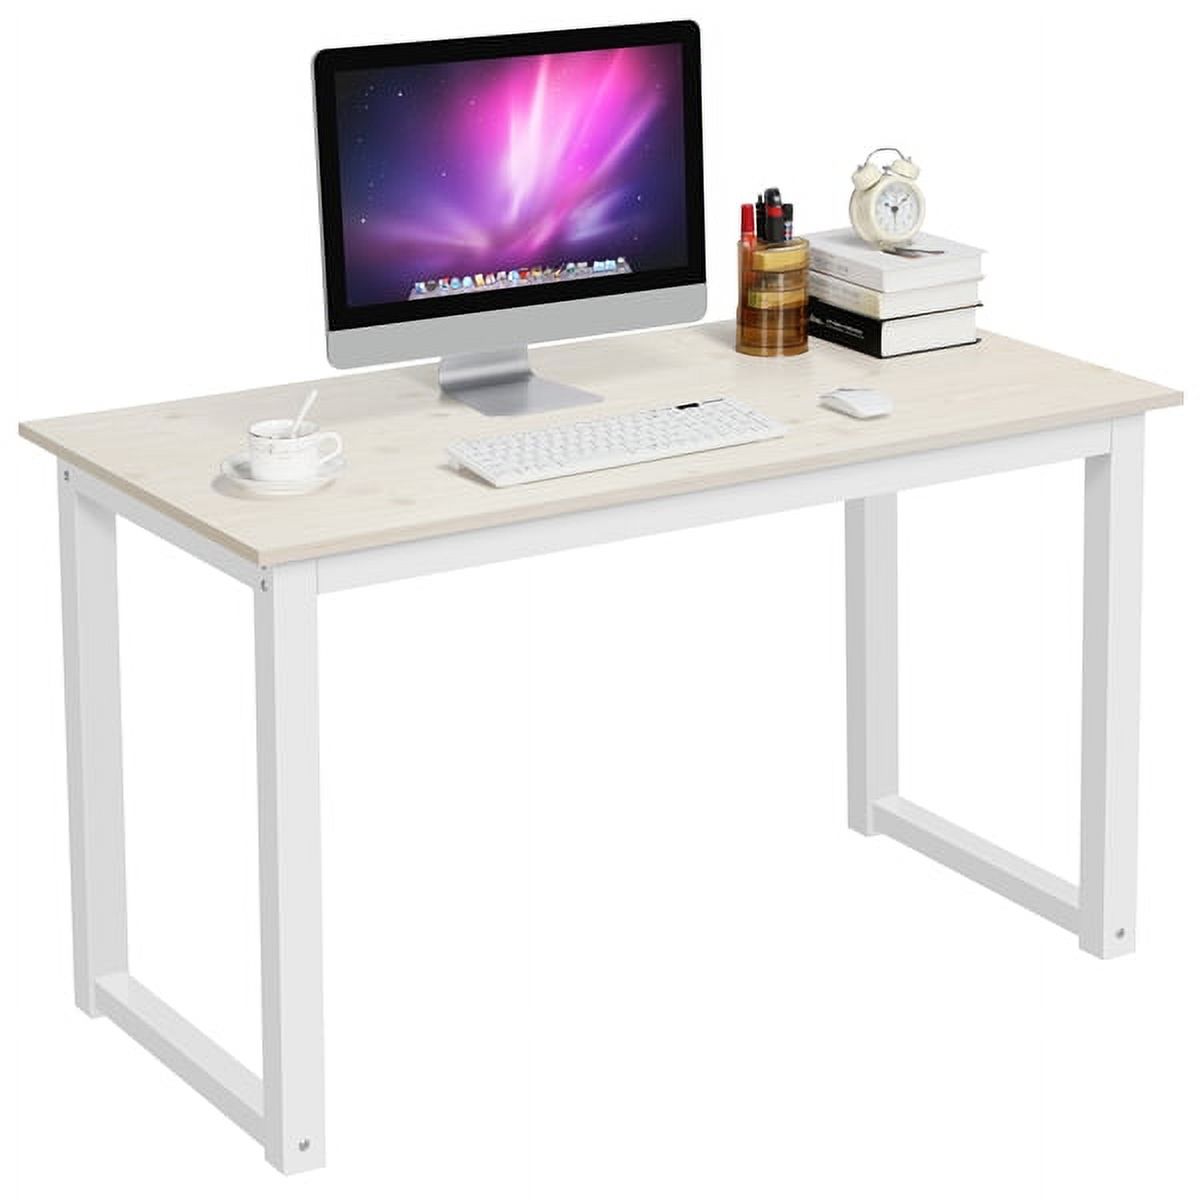 Alden Design Modern Home Office Computer Desk with White Metal Frame and Light Walnut Wood Top - image 1 of 10